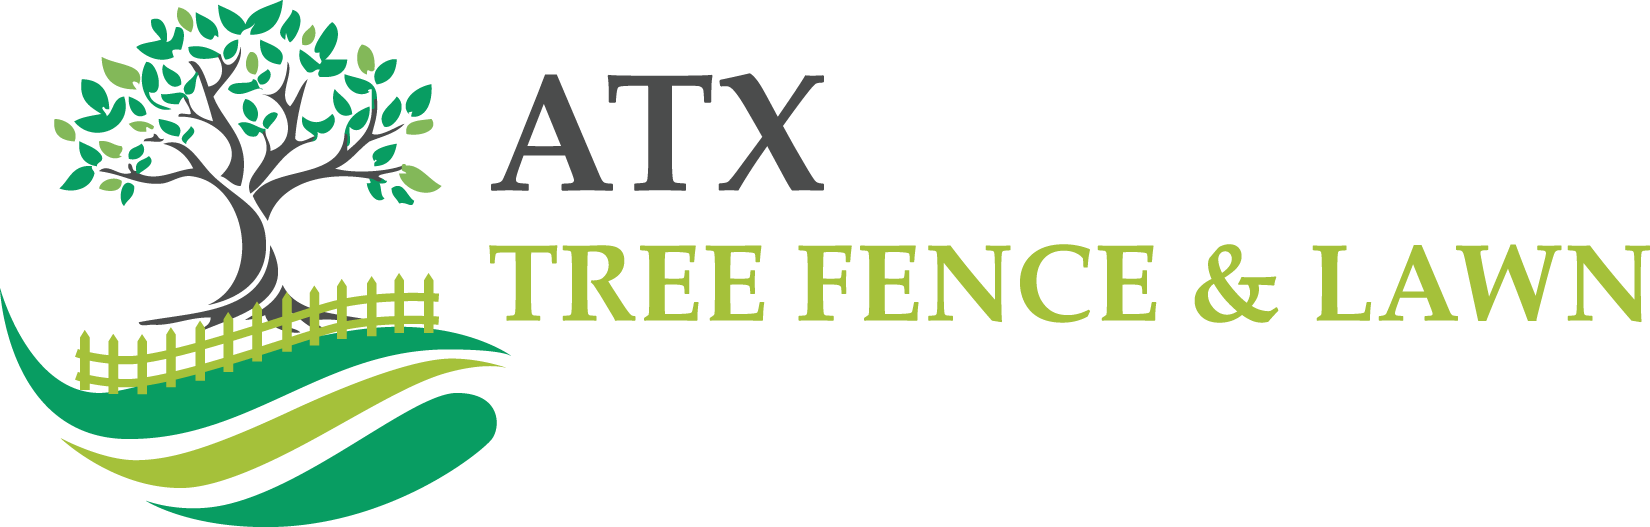 ATX TREE FENCE & LAWN